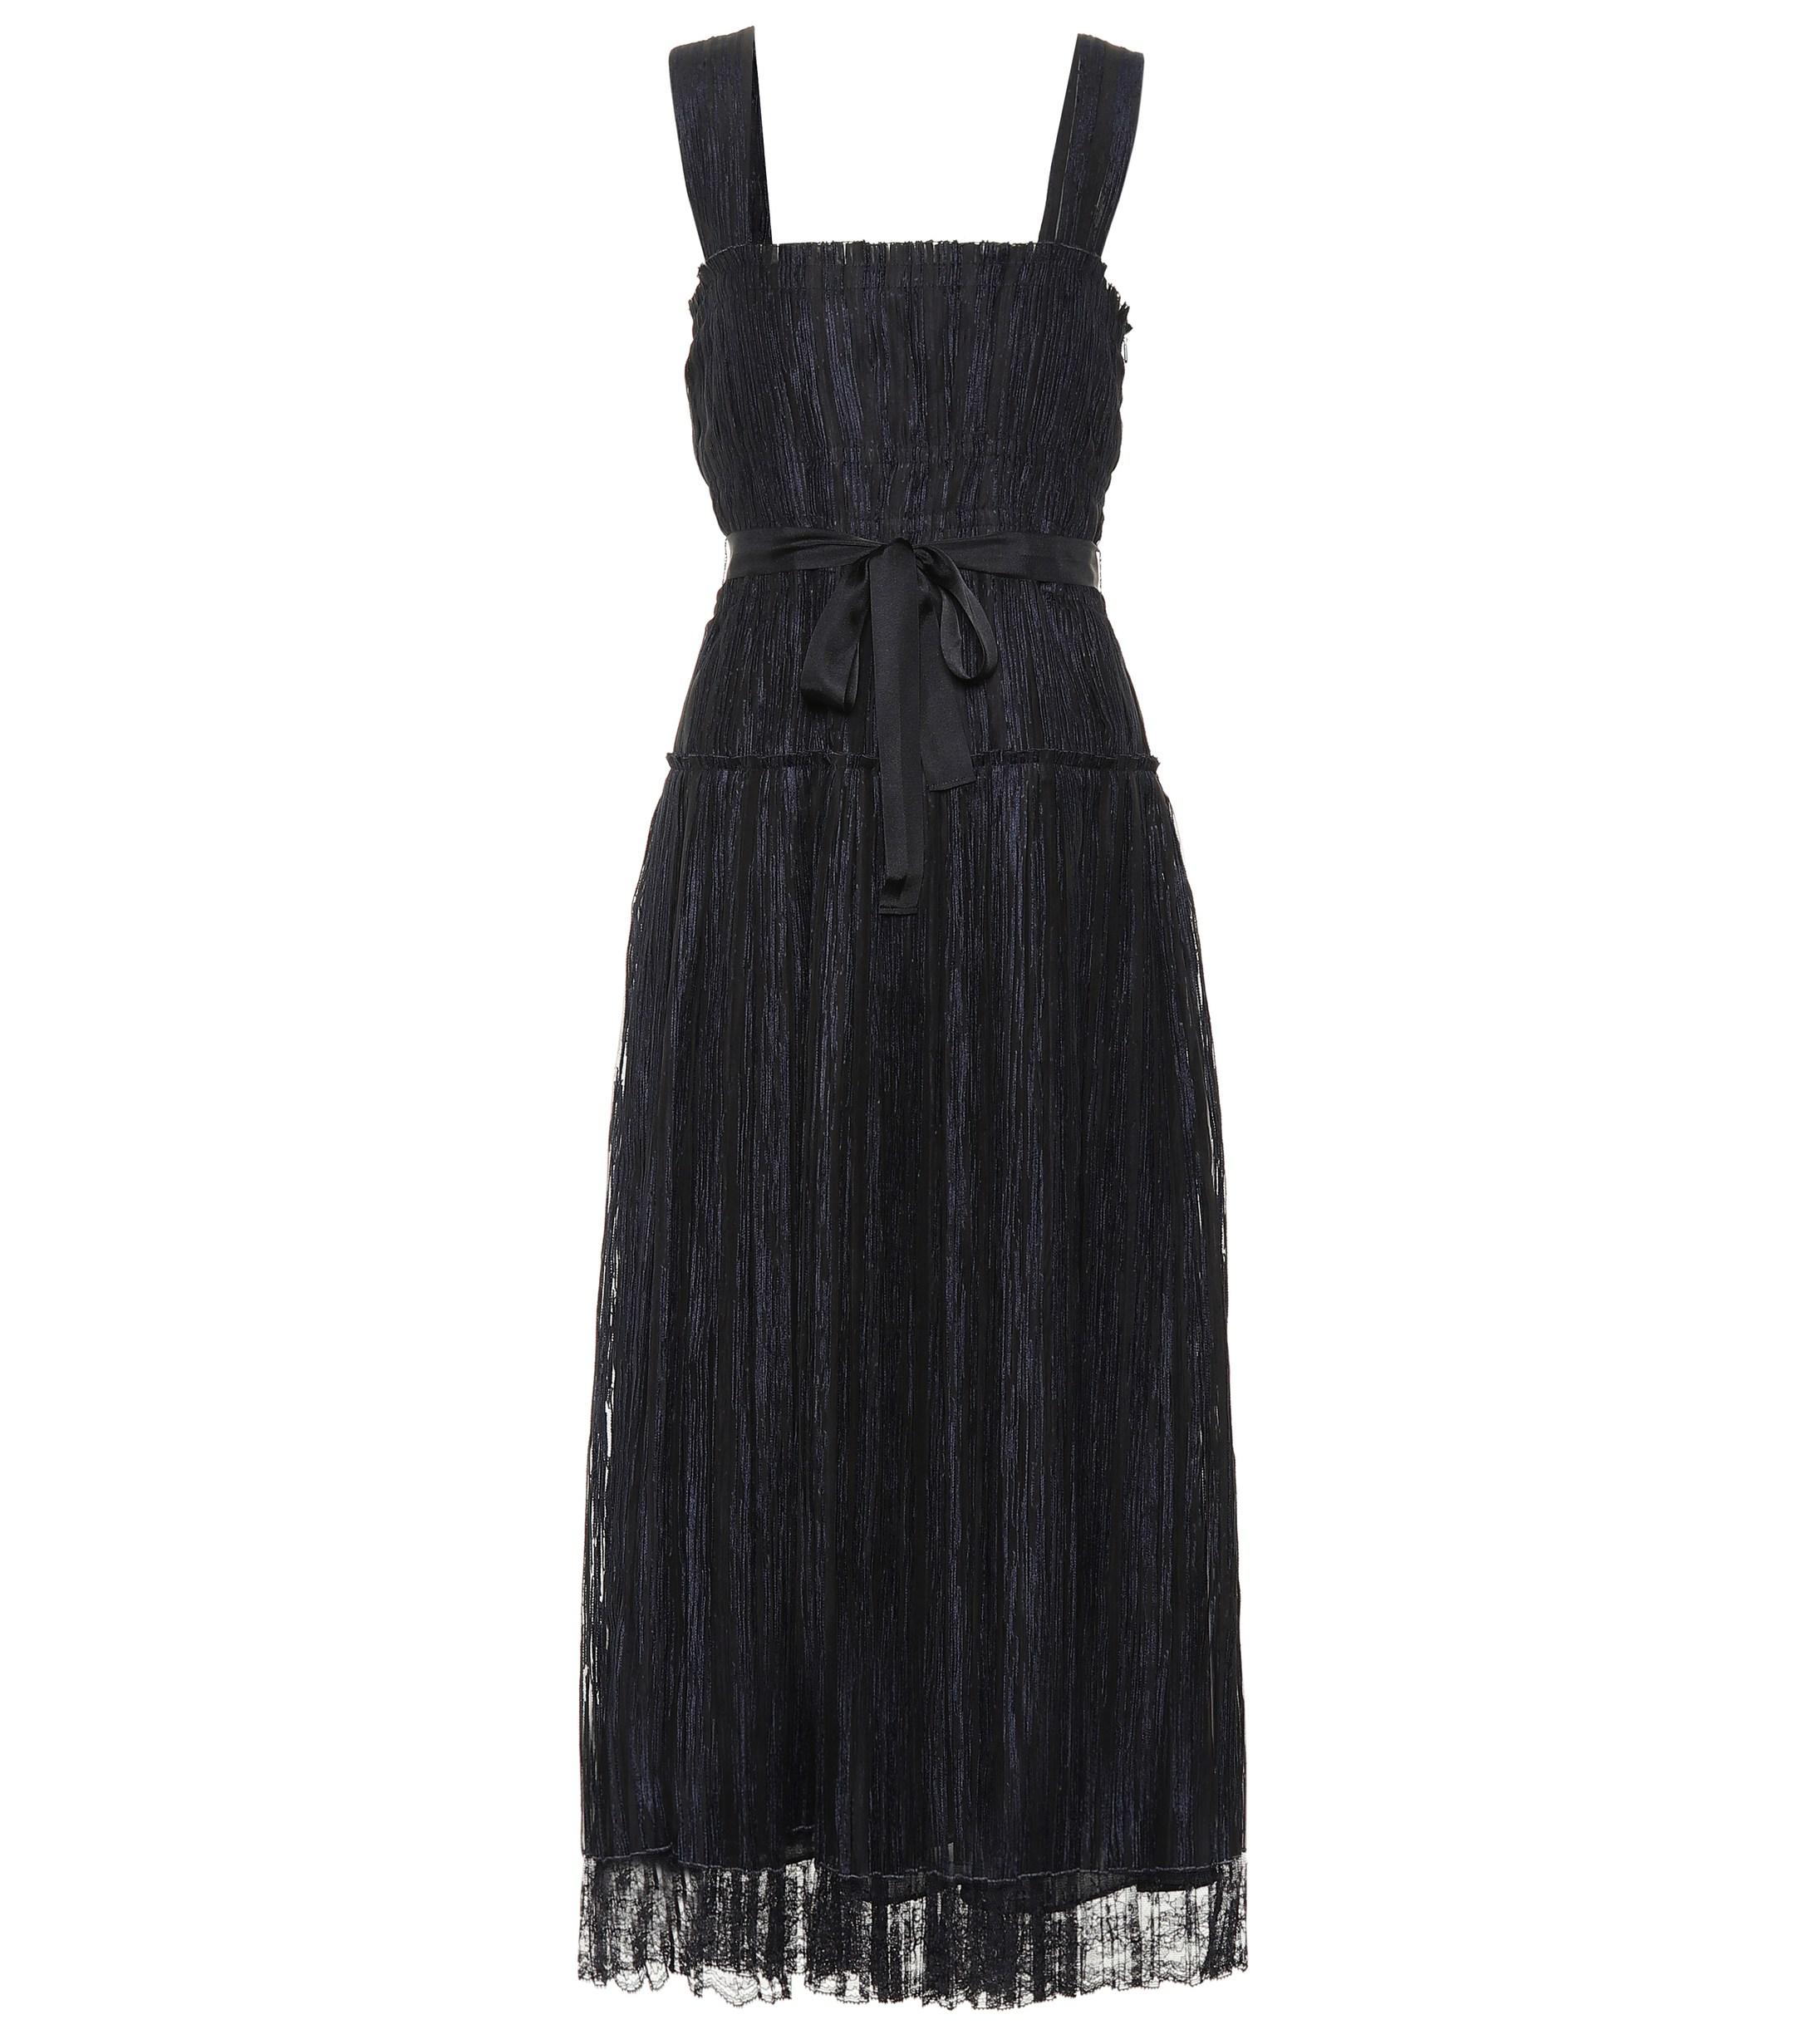 Bottega Veneta Lace-trimmed Silk-blend Dress in Nero/Nero (Black) - Lyst